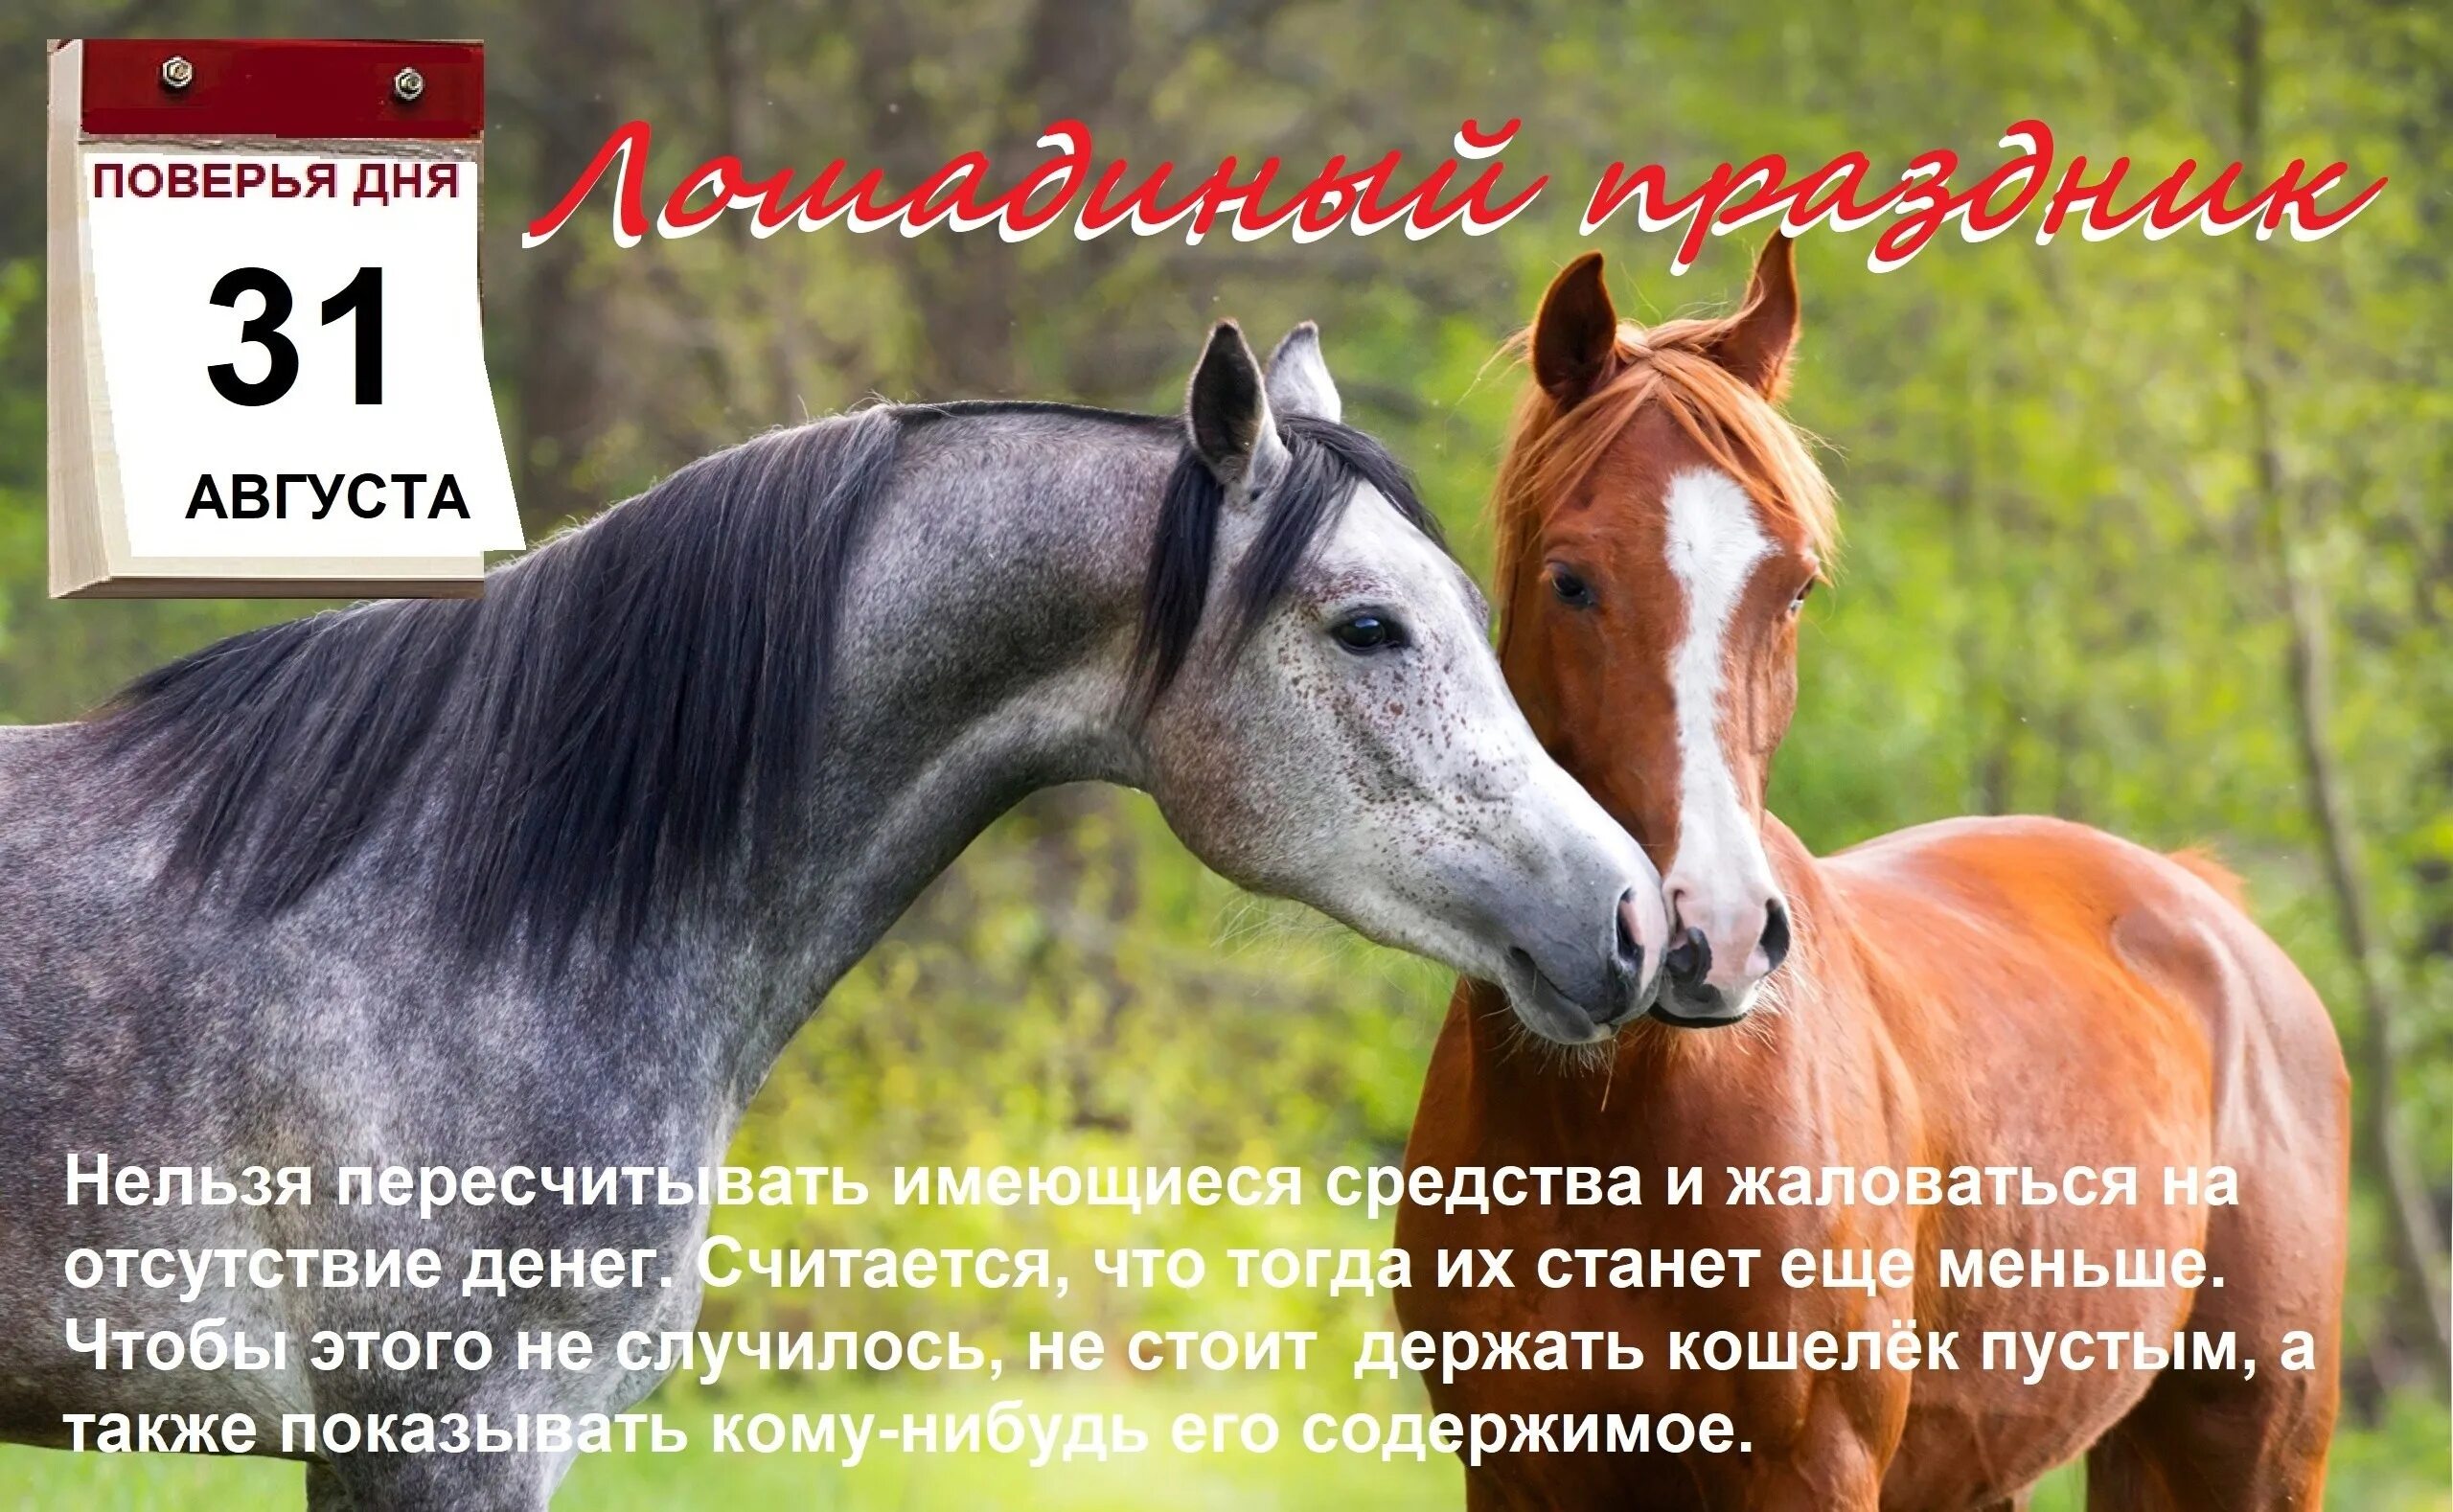 31 августа 2018 г. День лошади. Праздник день лошади. День защиты лошадей. 31 Августа праздник.